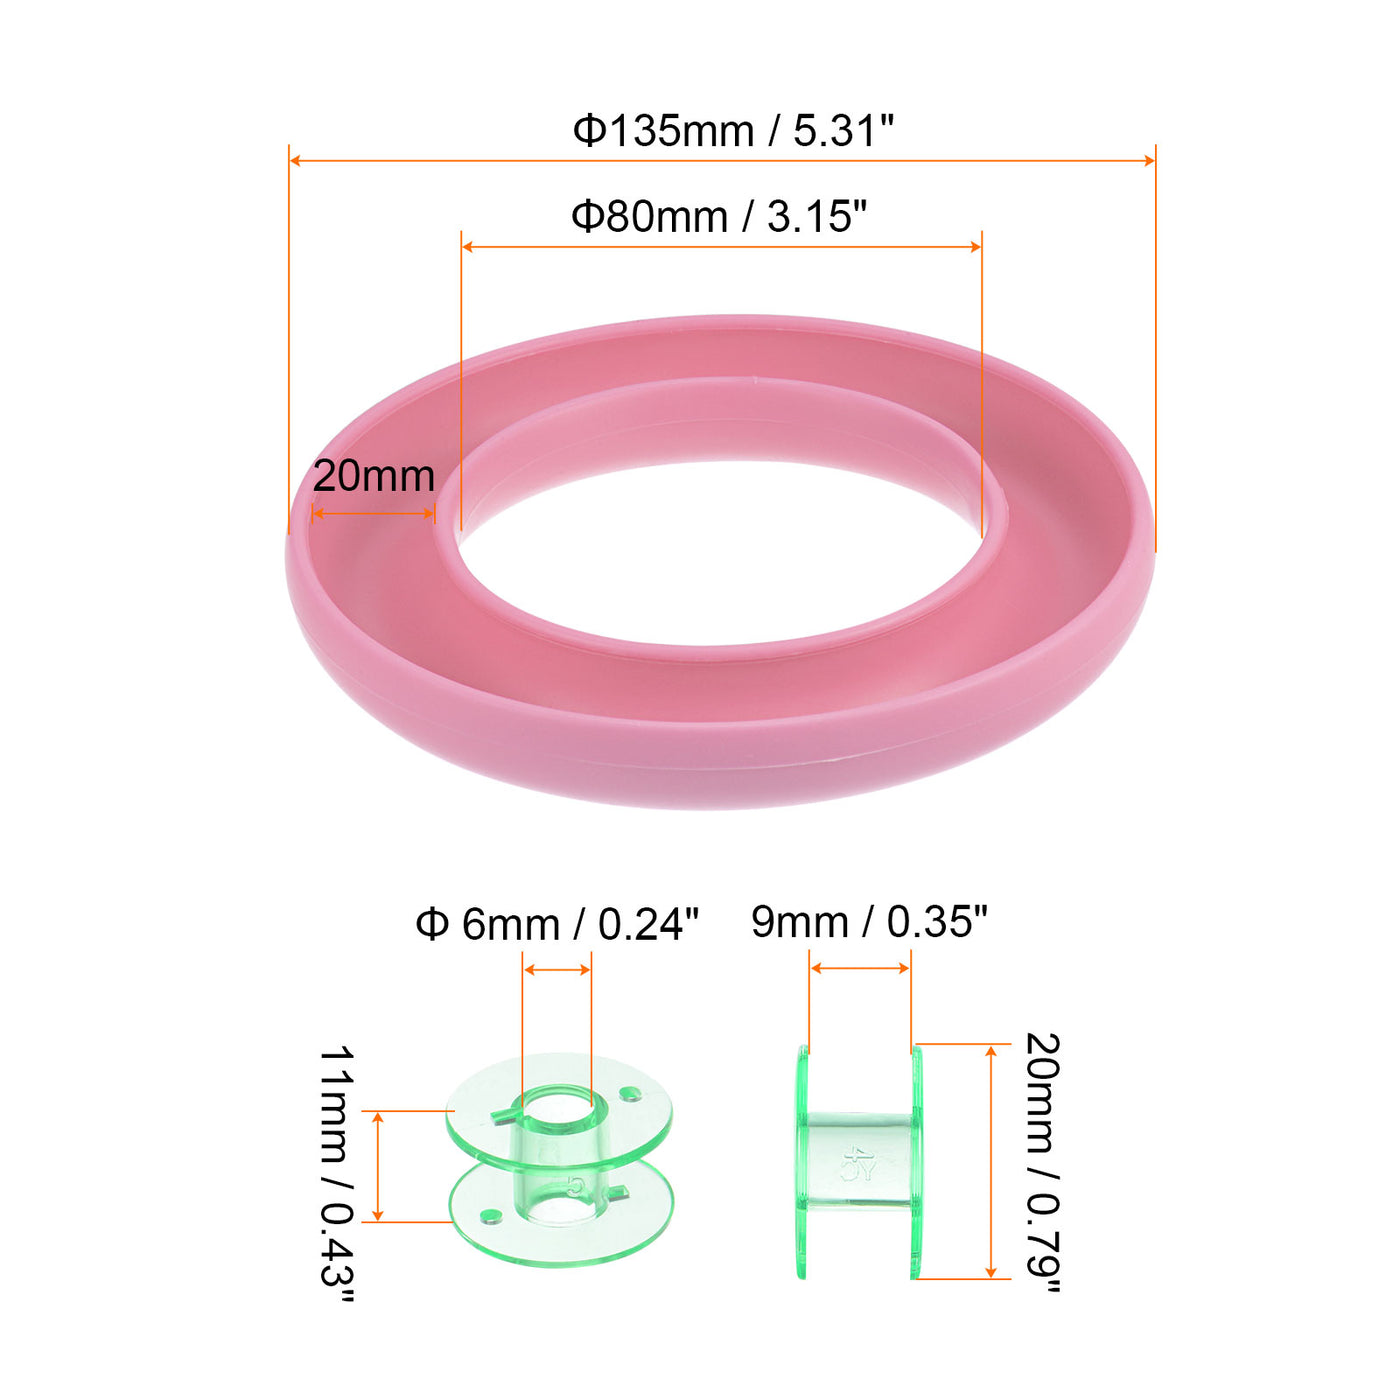 Harfington Silicone Bobbin Ring Holder and 20 Plastic Bobbins Set, Pink/Green